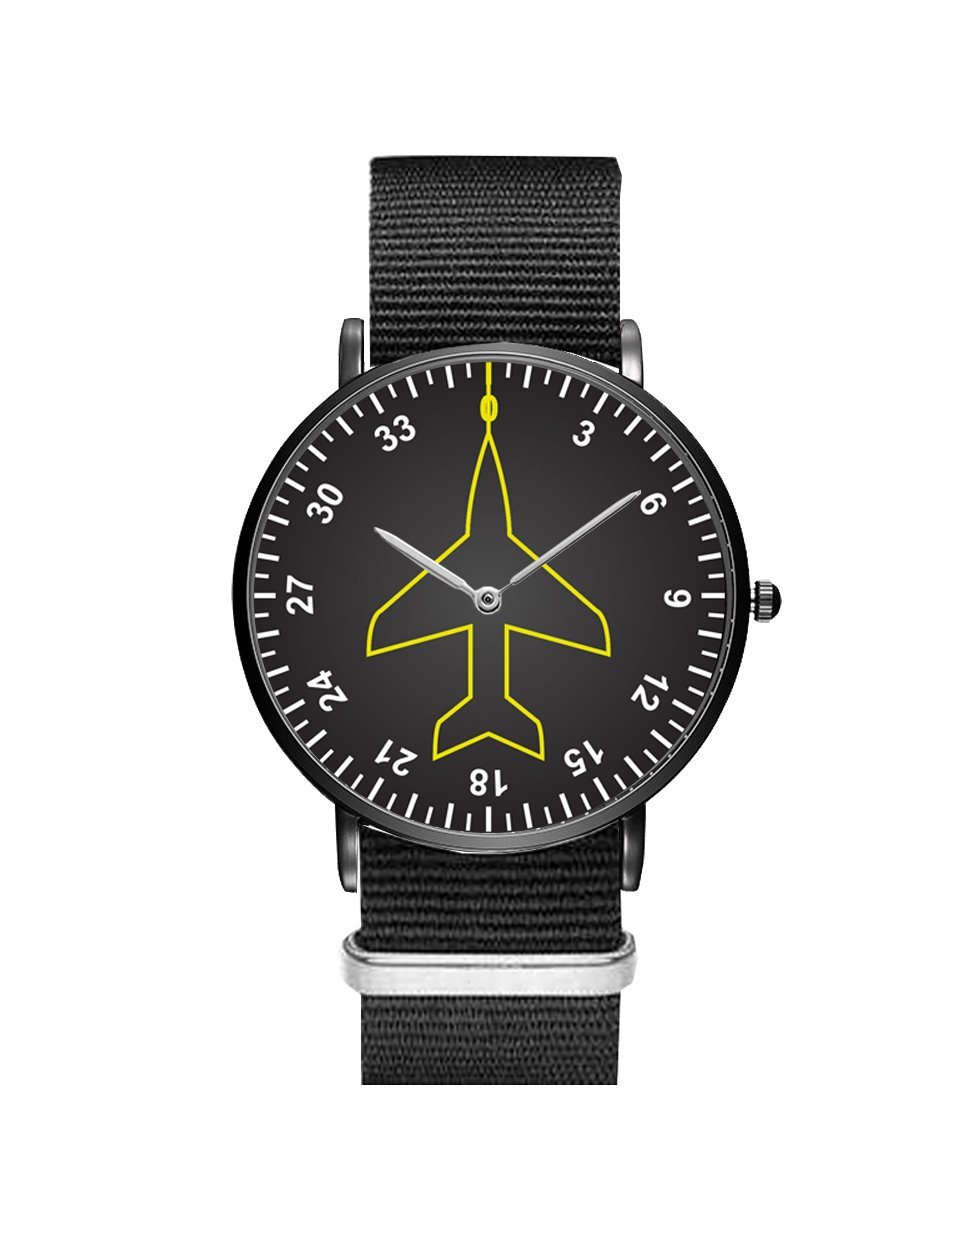 Airplane Instrument Series (Heading) Leather Strap Watches Pilot Eyes Store Black & Black Nylon Strap 